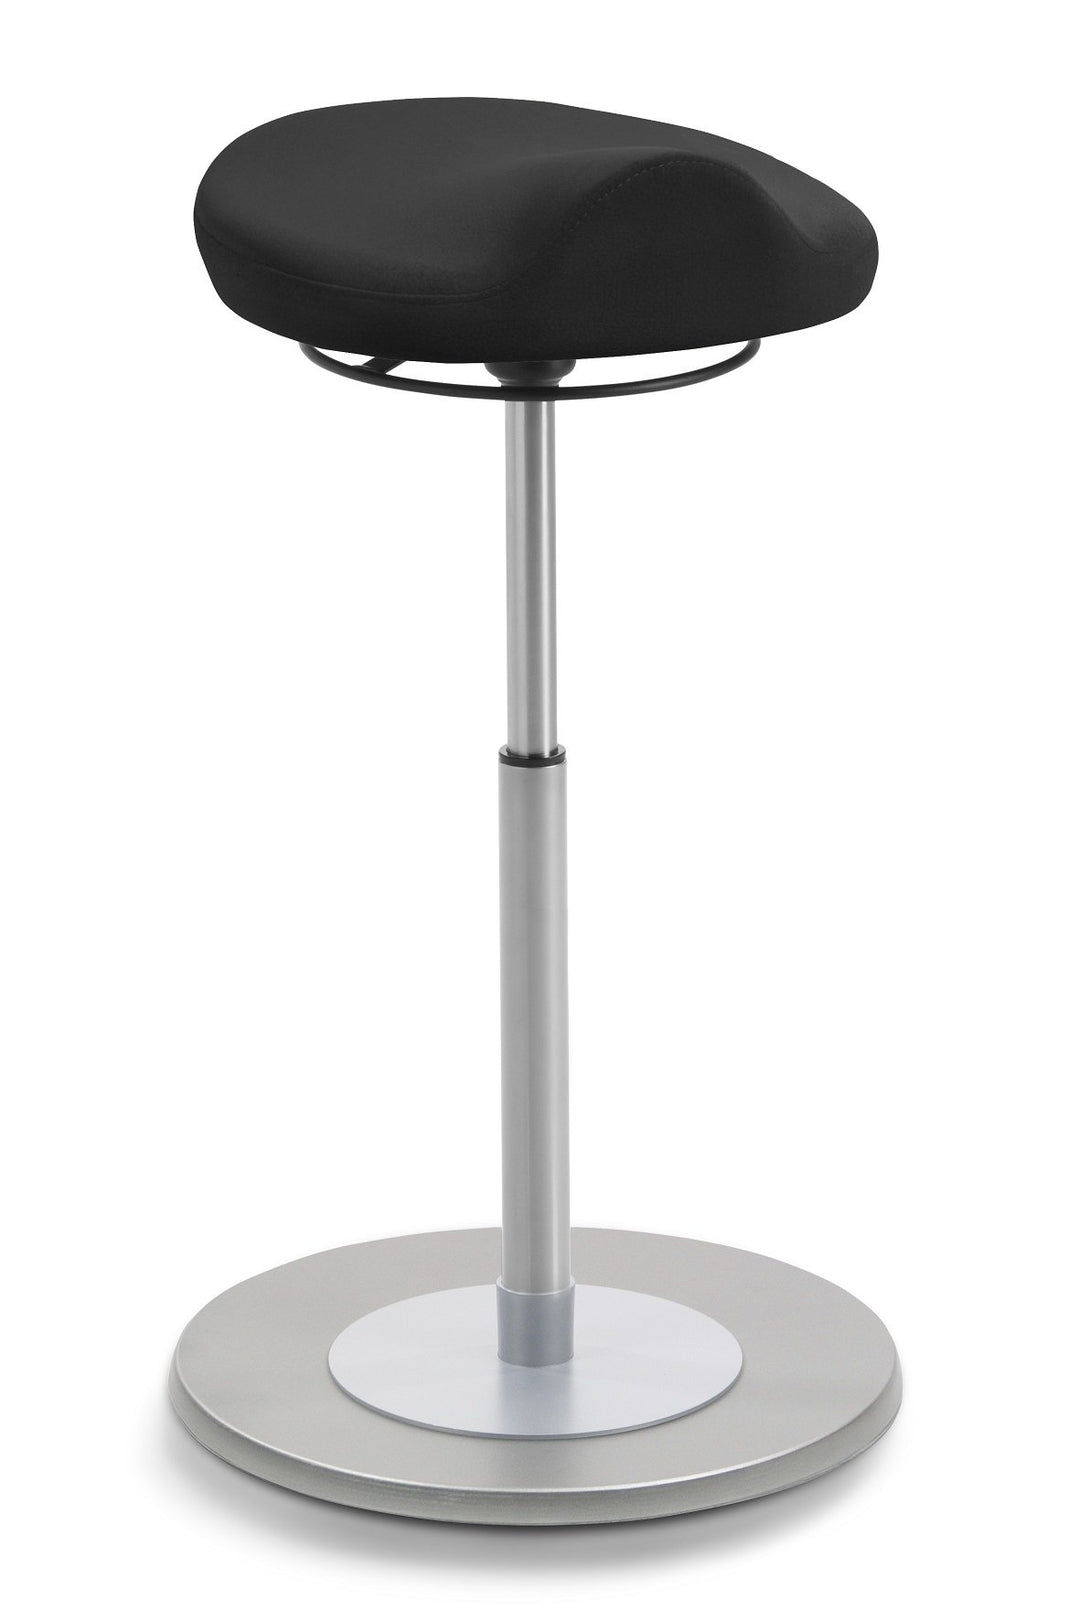 Mayer MyErgosit Taboret Krzesło Stołek balansujący 3D 54-79cm podstawa srebrna 1101 EF